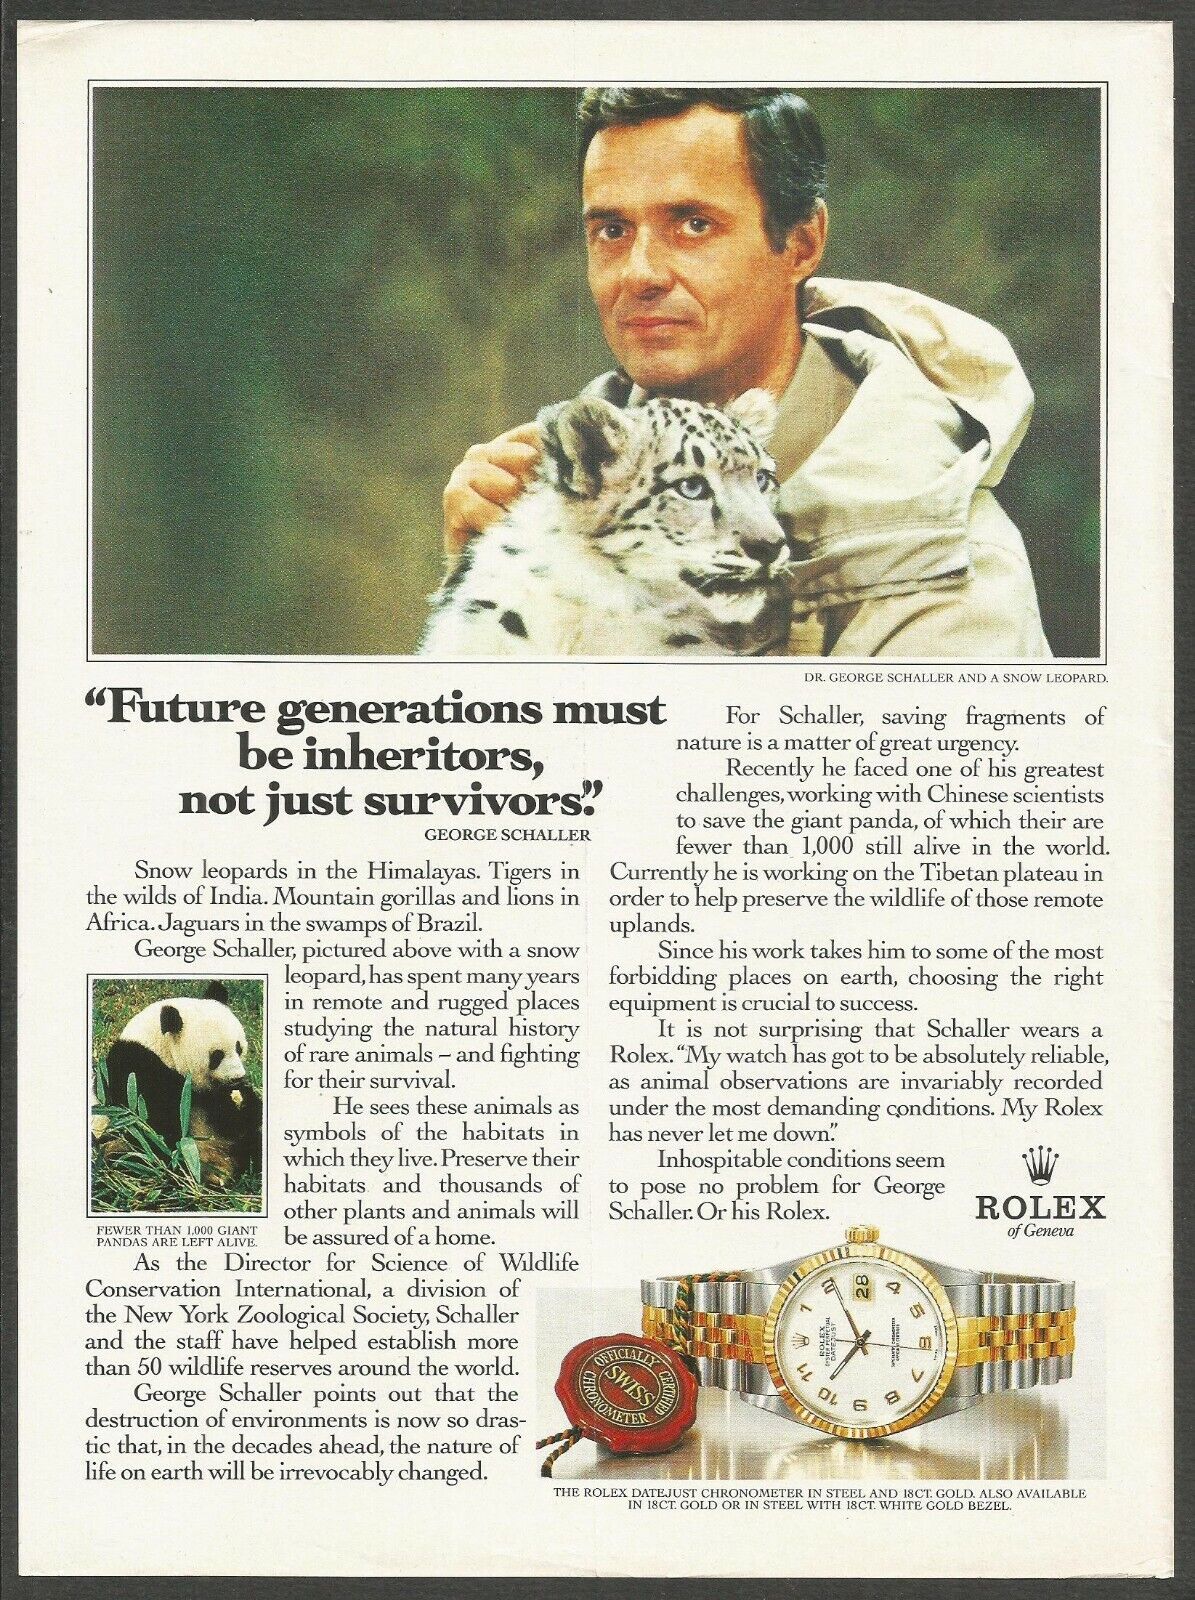 ROLEX - Dr.George Schaller and a Snow Leopard - 1989 Watch Print Ad